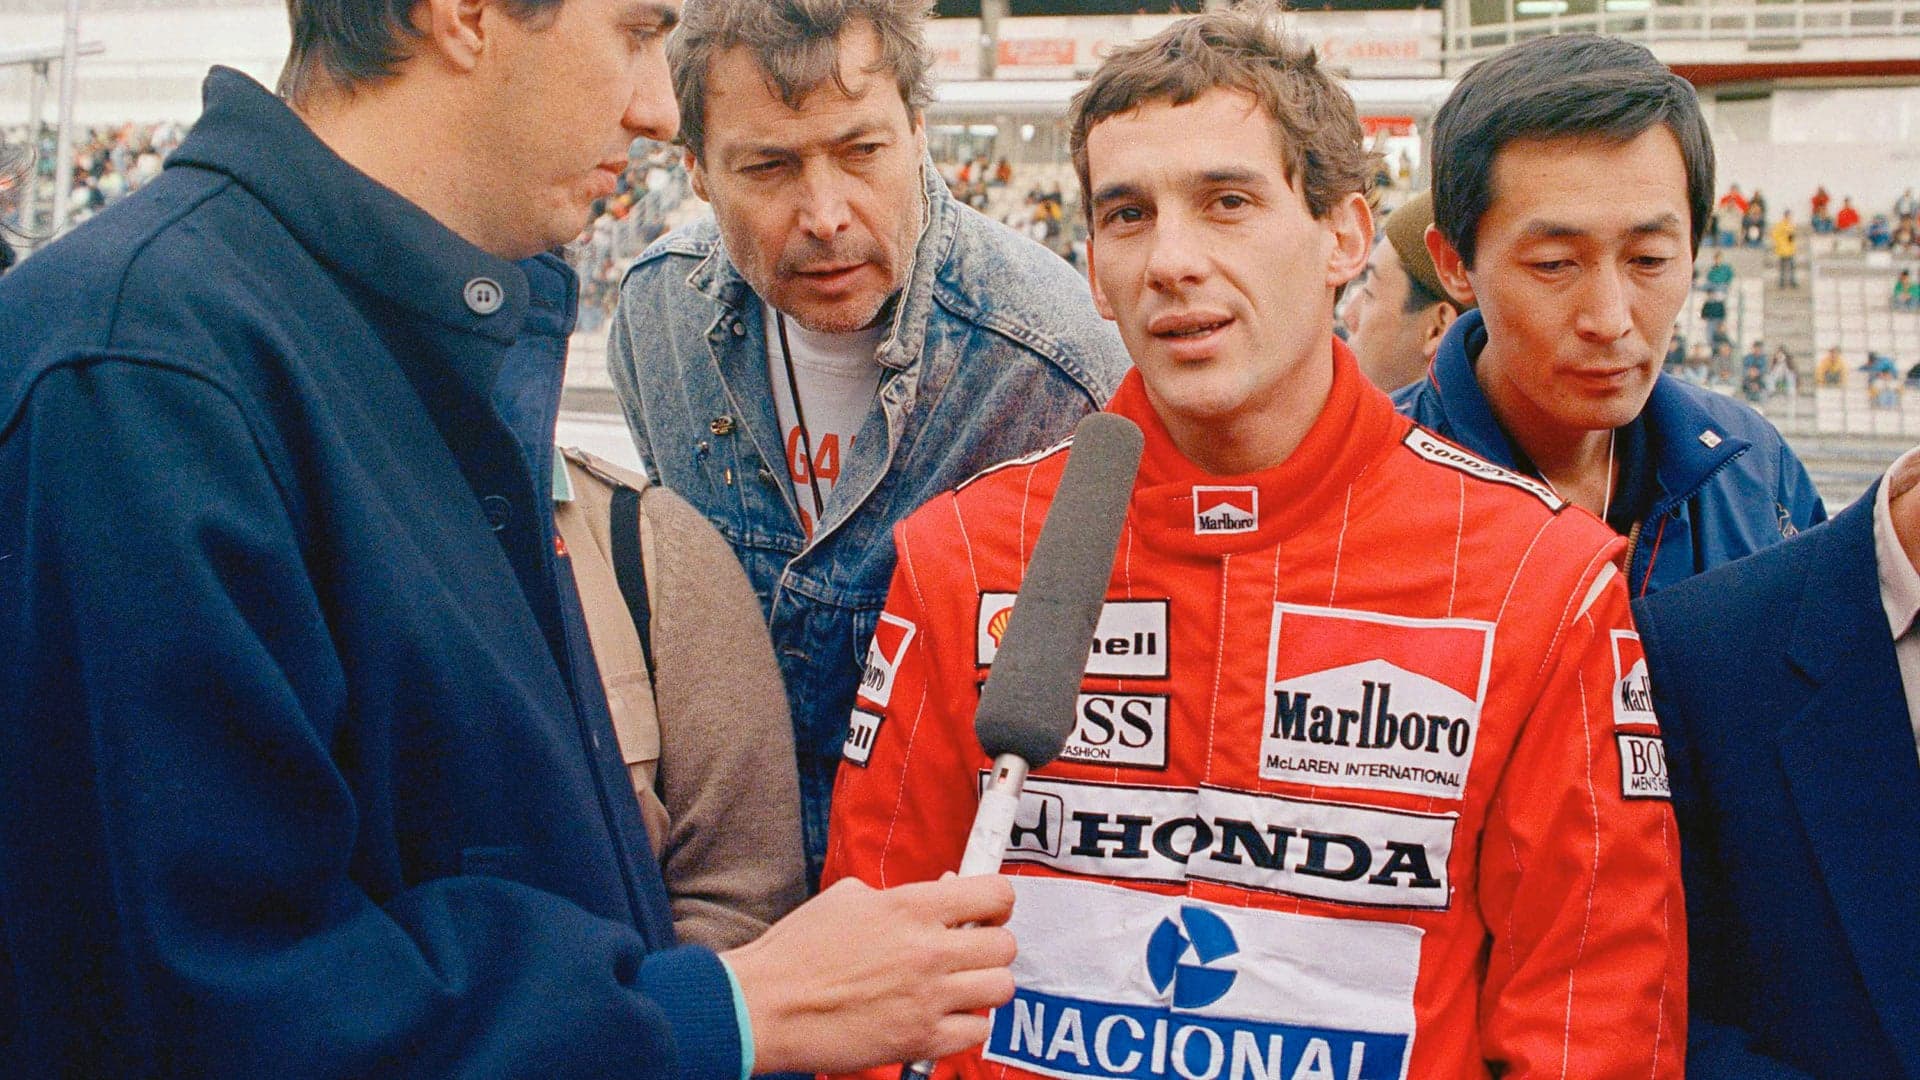 Ayrton Senna Miniseries Coming to Netflix in 2022